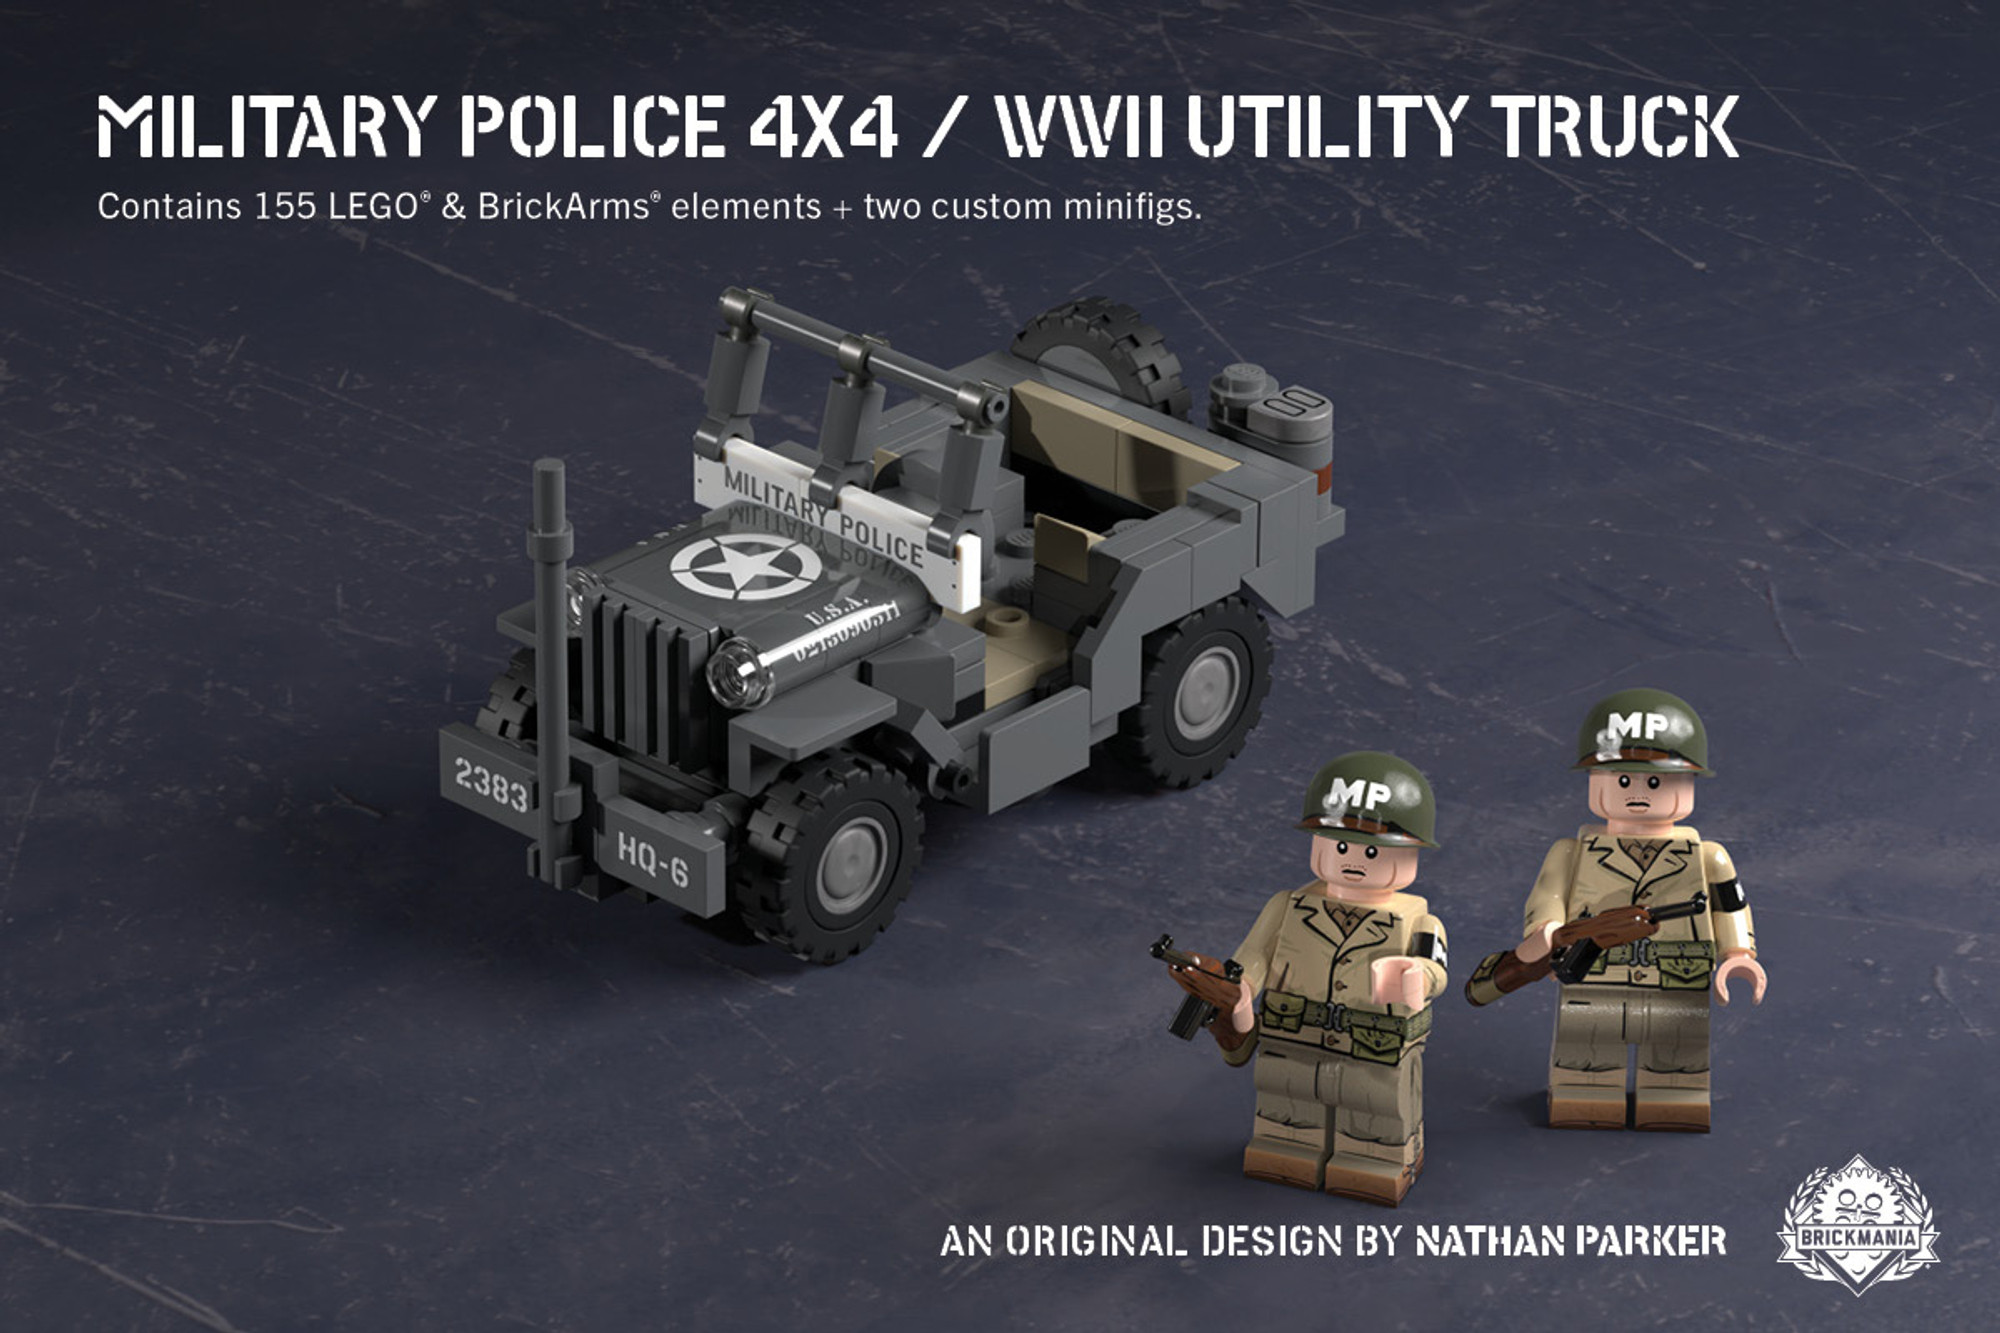 WW2 4 x 4 Utility Vehicle Made With Real Lego® Bricks